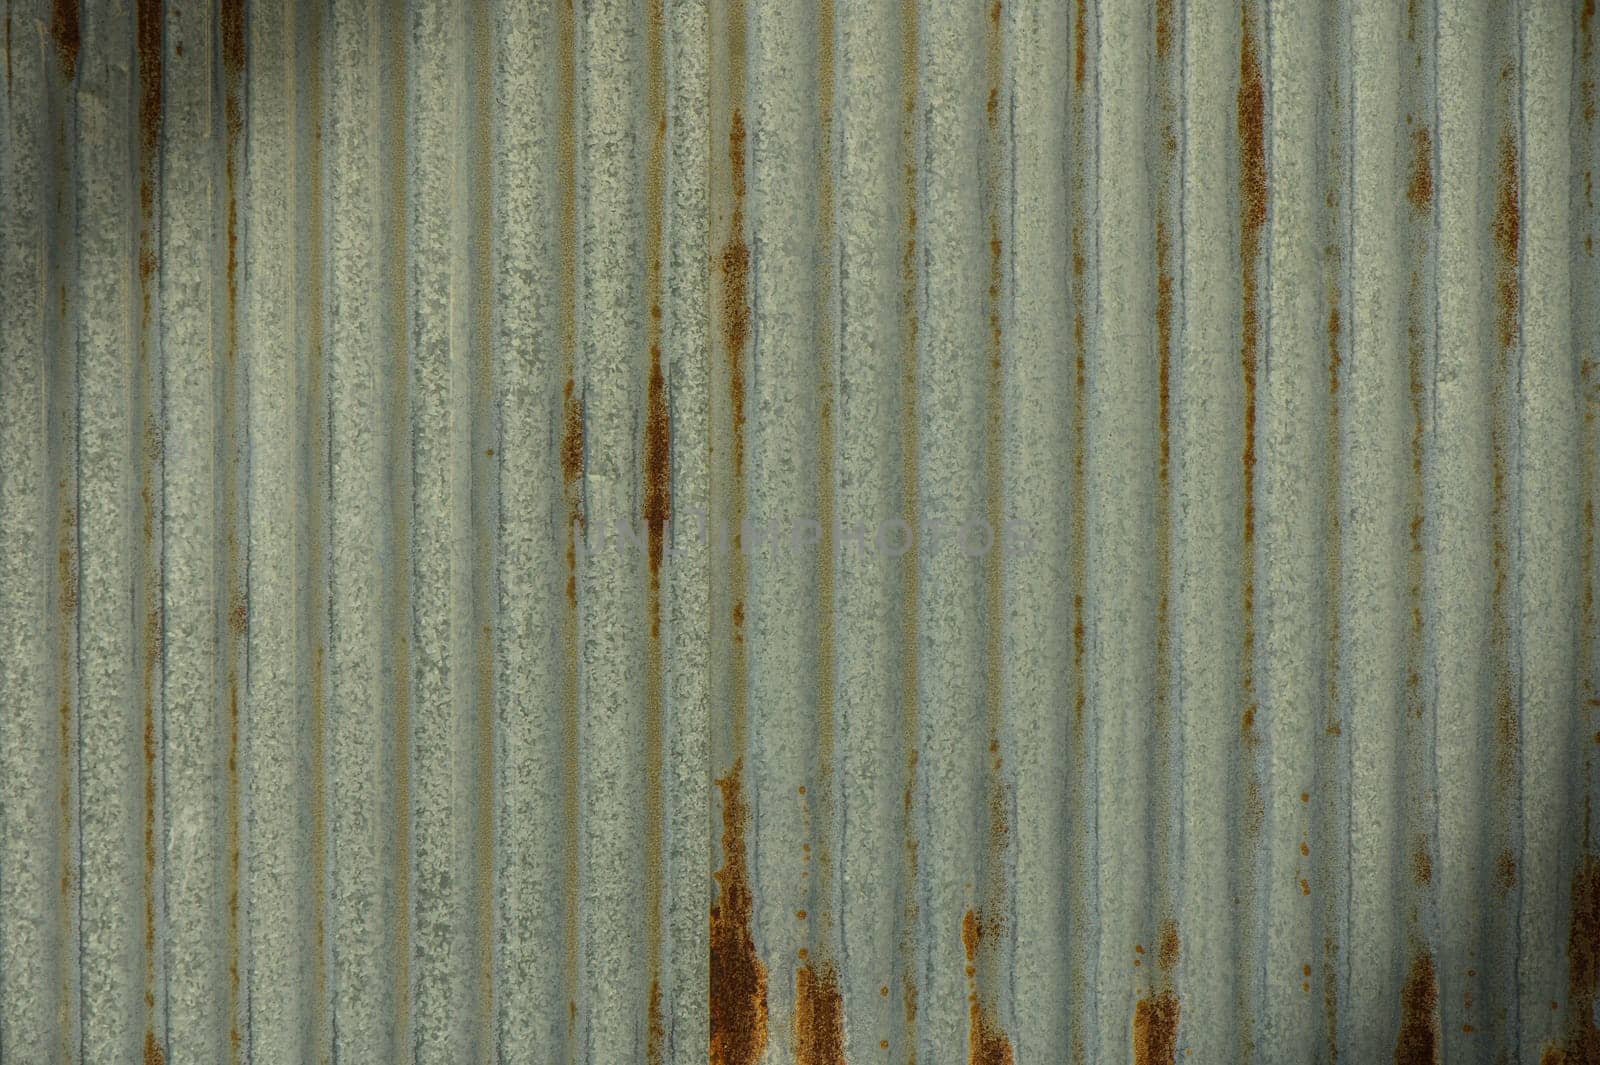 Refurbished, aged corrugated iron sheet on wall by Mixa74